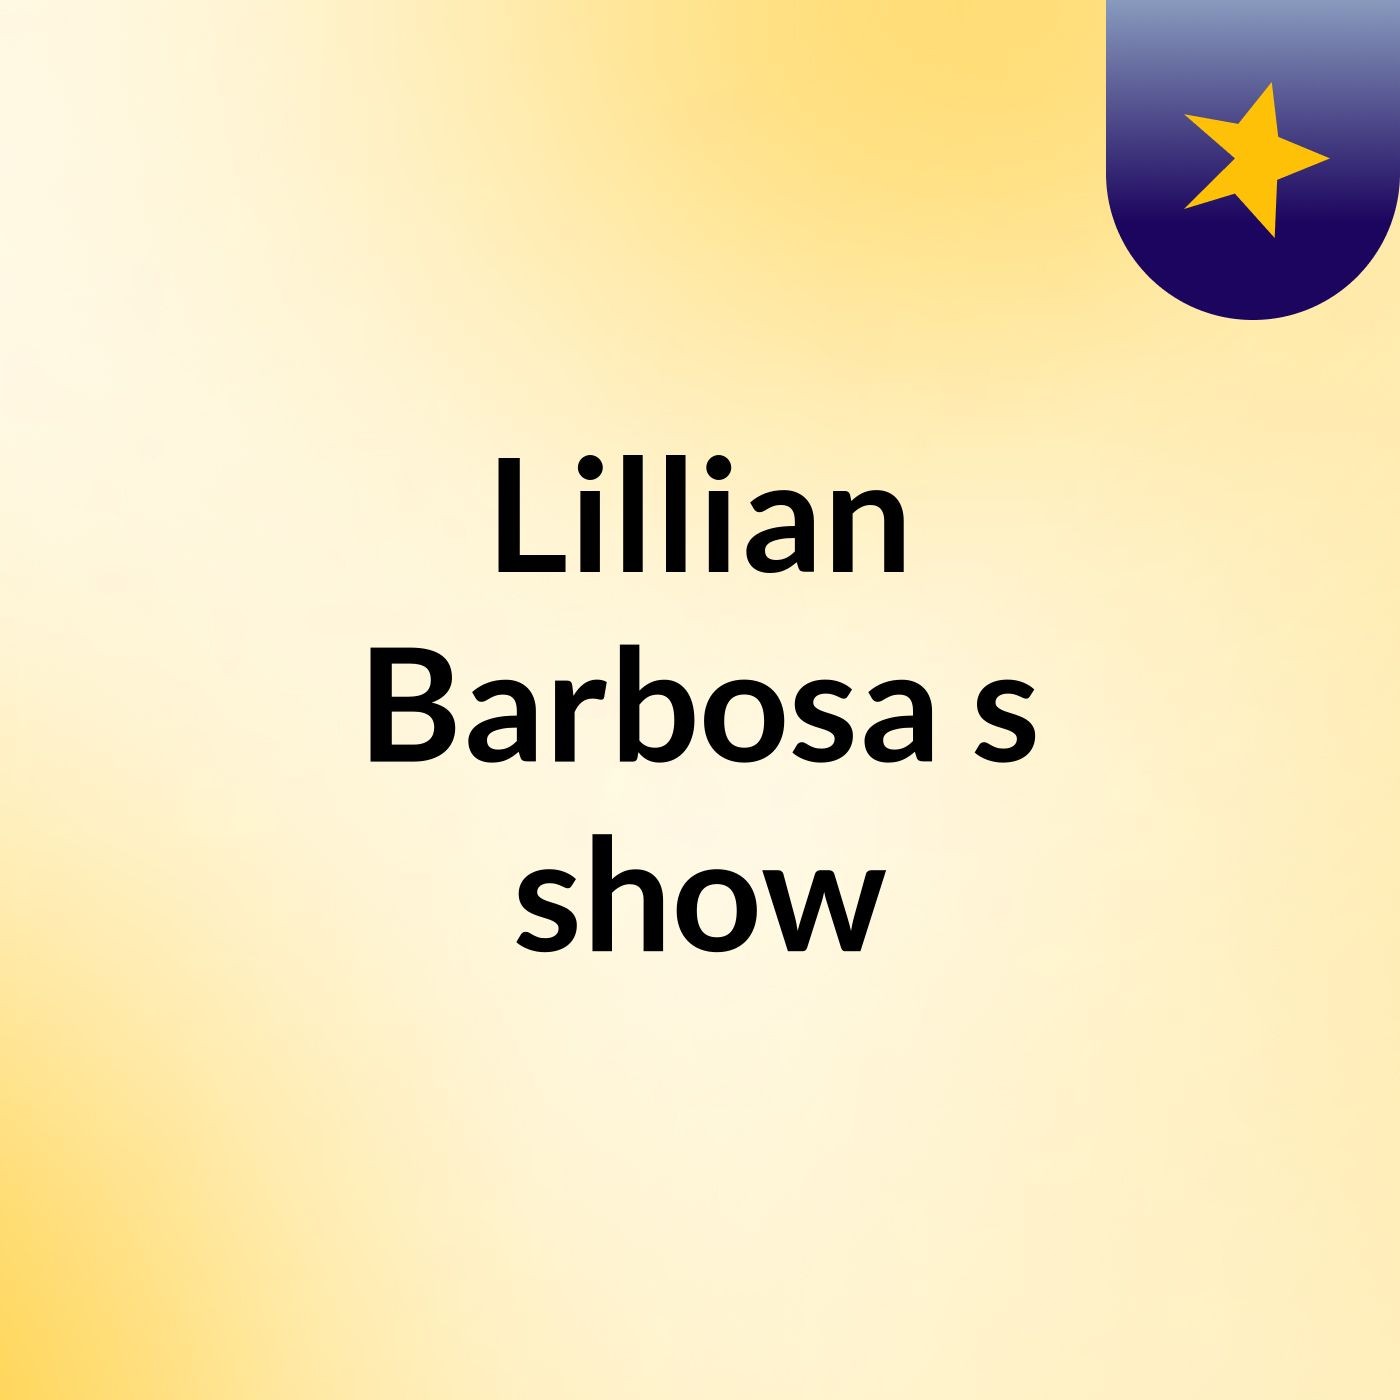 Lillian Barbosa's show